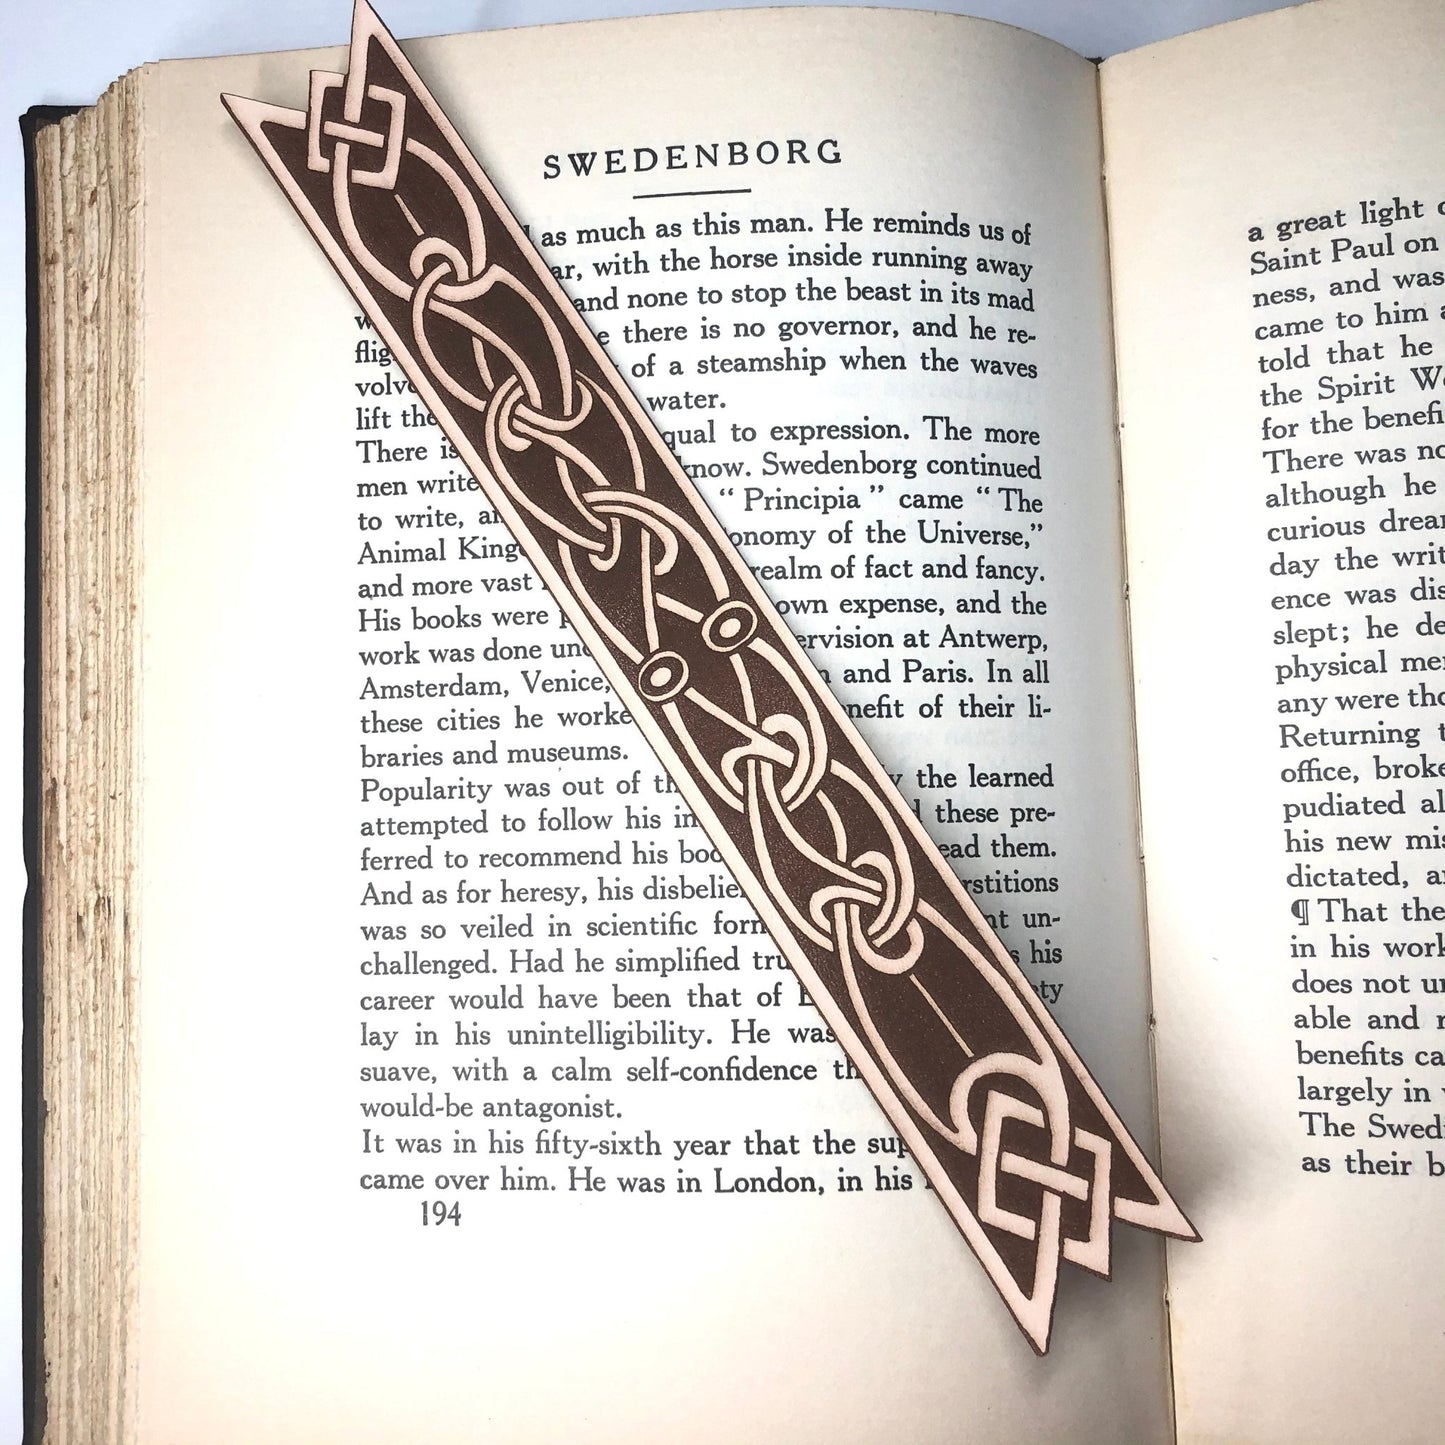 Leather Bookmark Ribbon - Hardiston